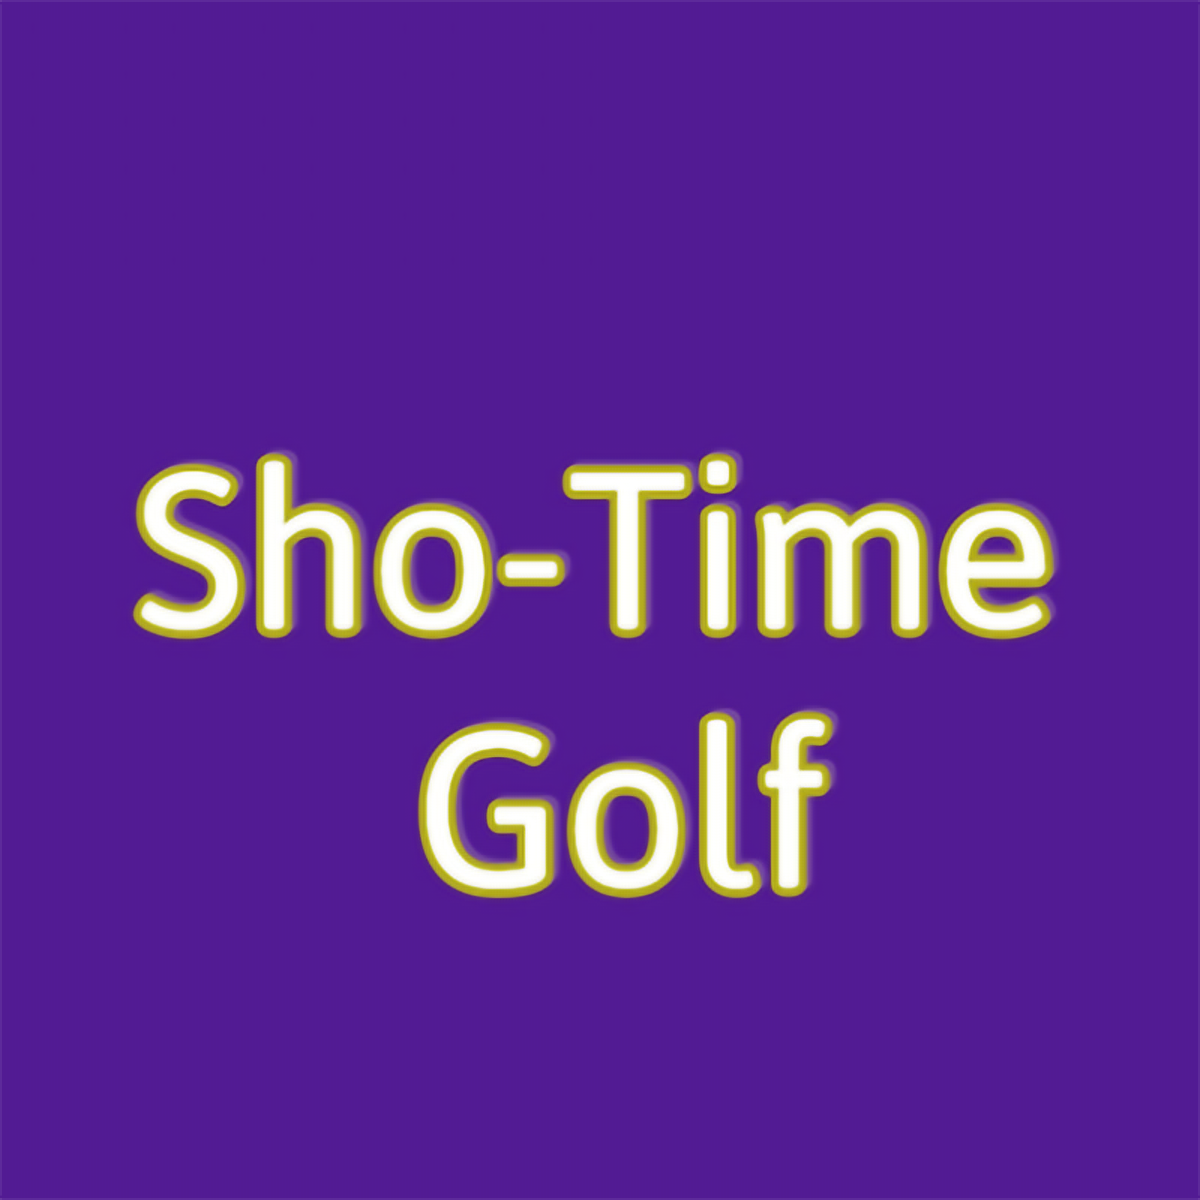 “Sho-Time Golf”